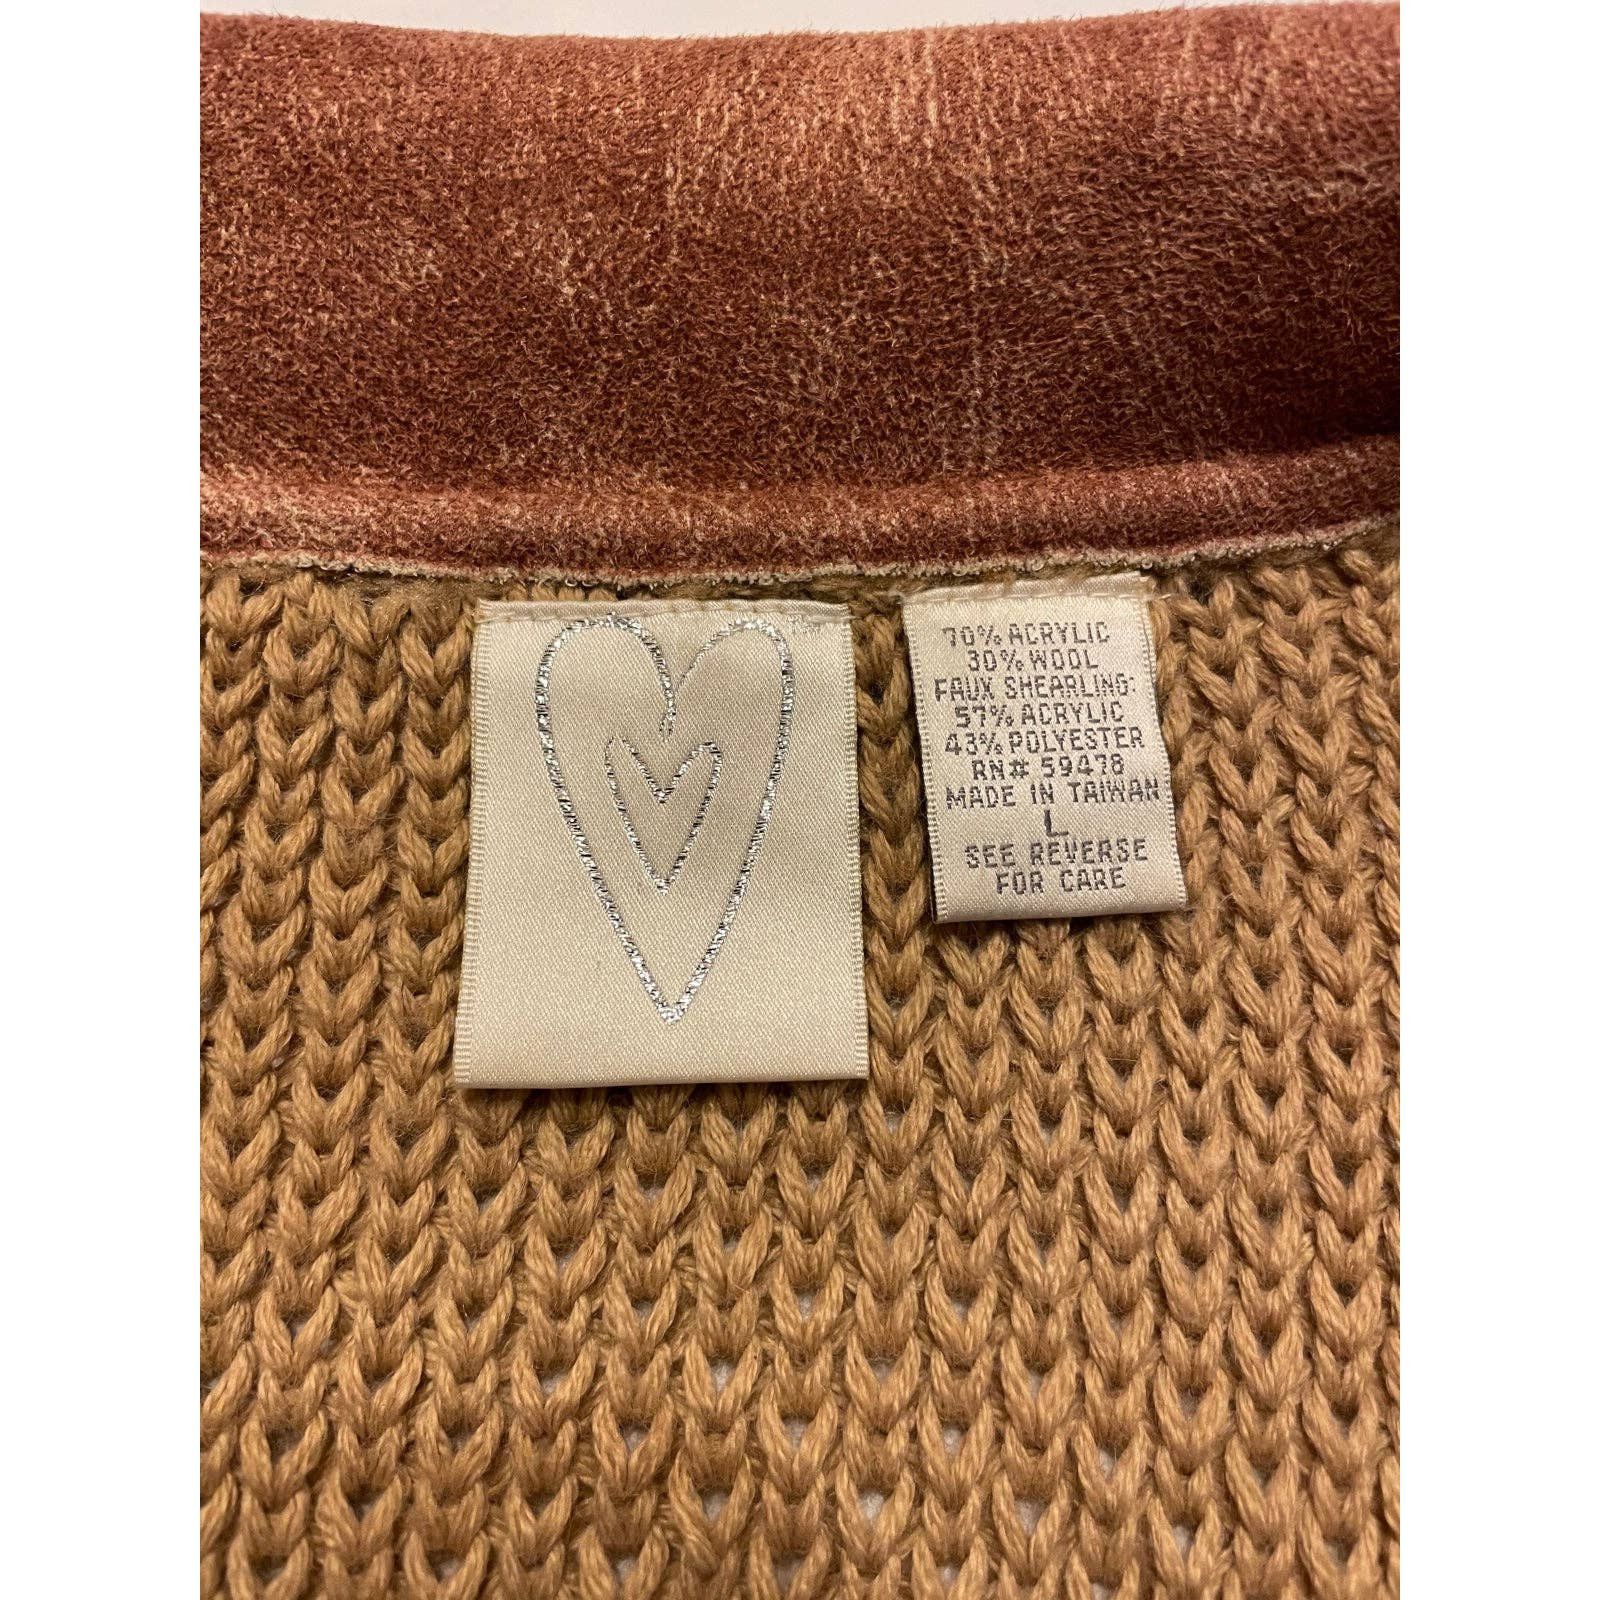 Vintage Vintage Y2K grunge faux shearling knit sweater jacket Size L Size L / US 10 / IT 46 - 7 Preview